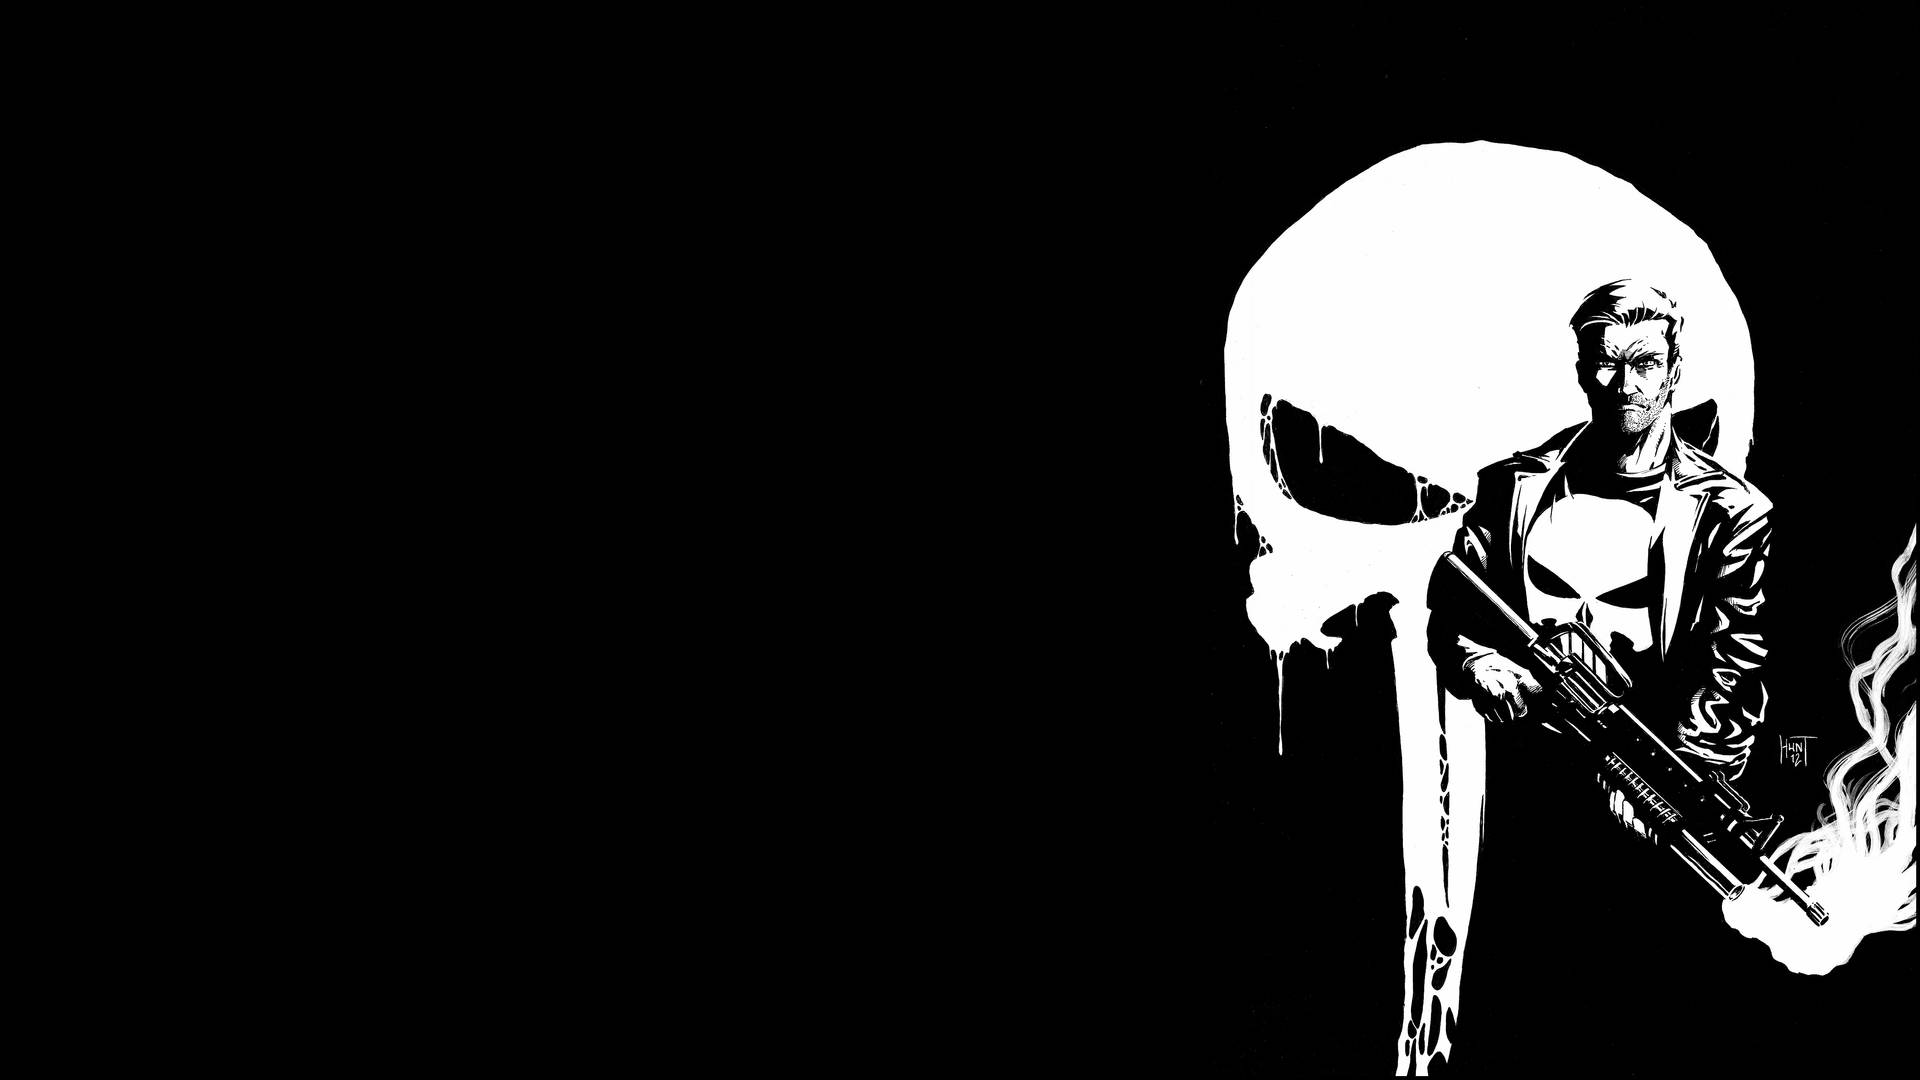 An intense, ruthless Punisher Logo in high resolution, showcasing the iconic skull in menacing detail Wallpaper